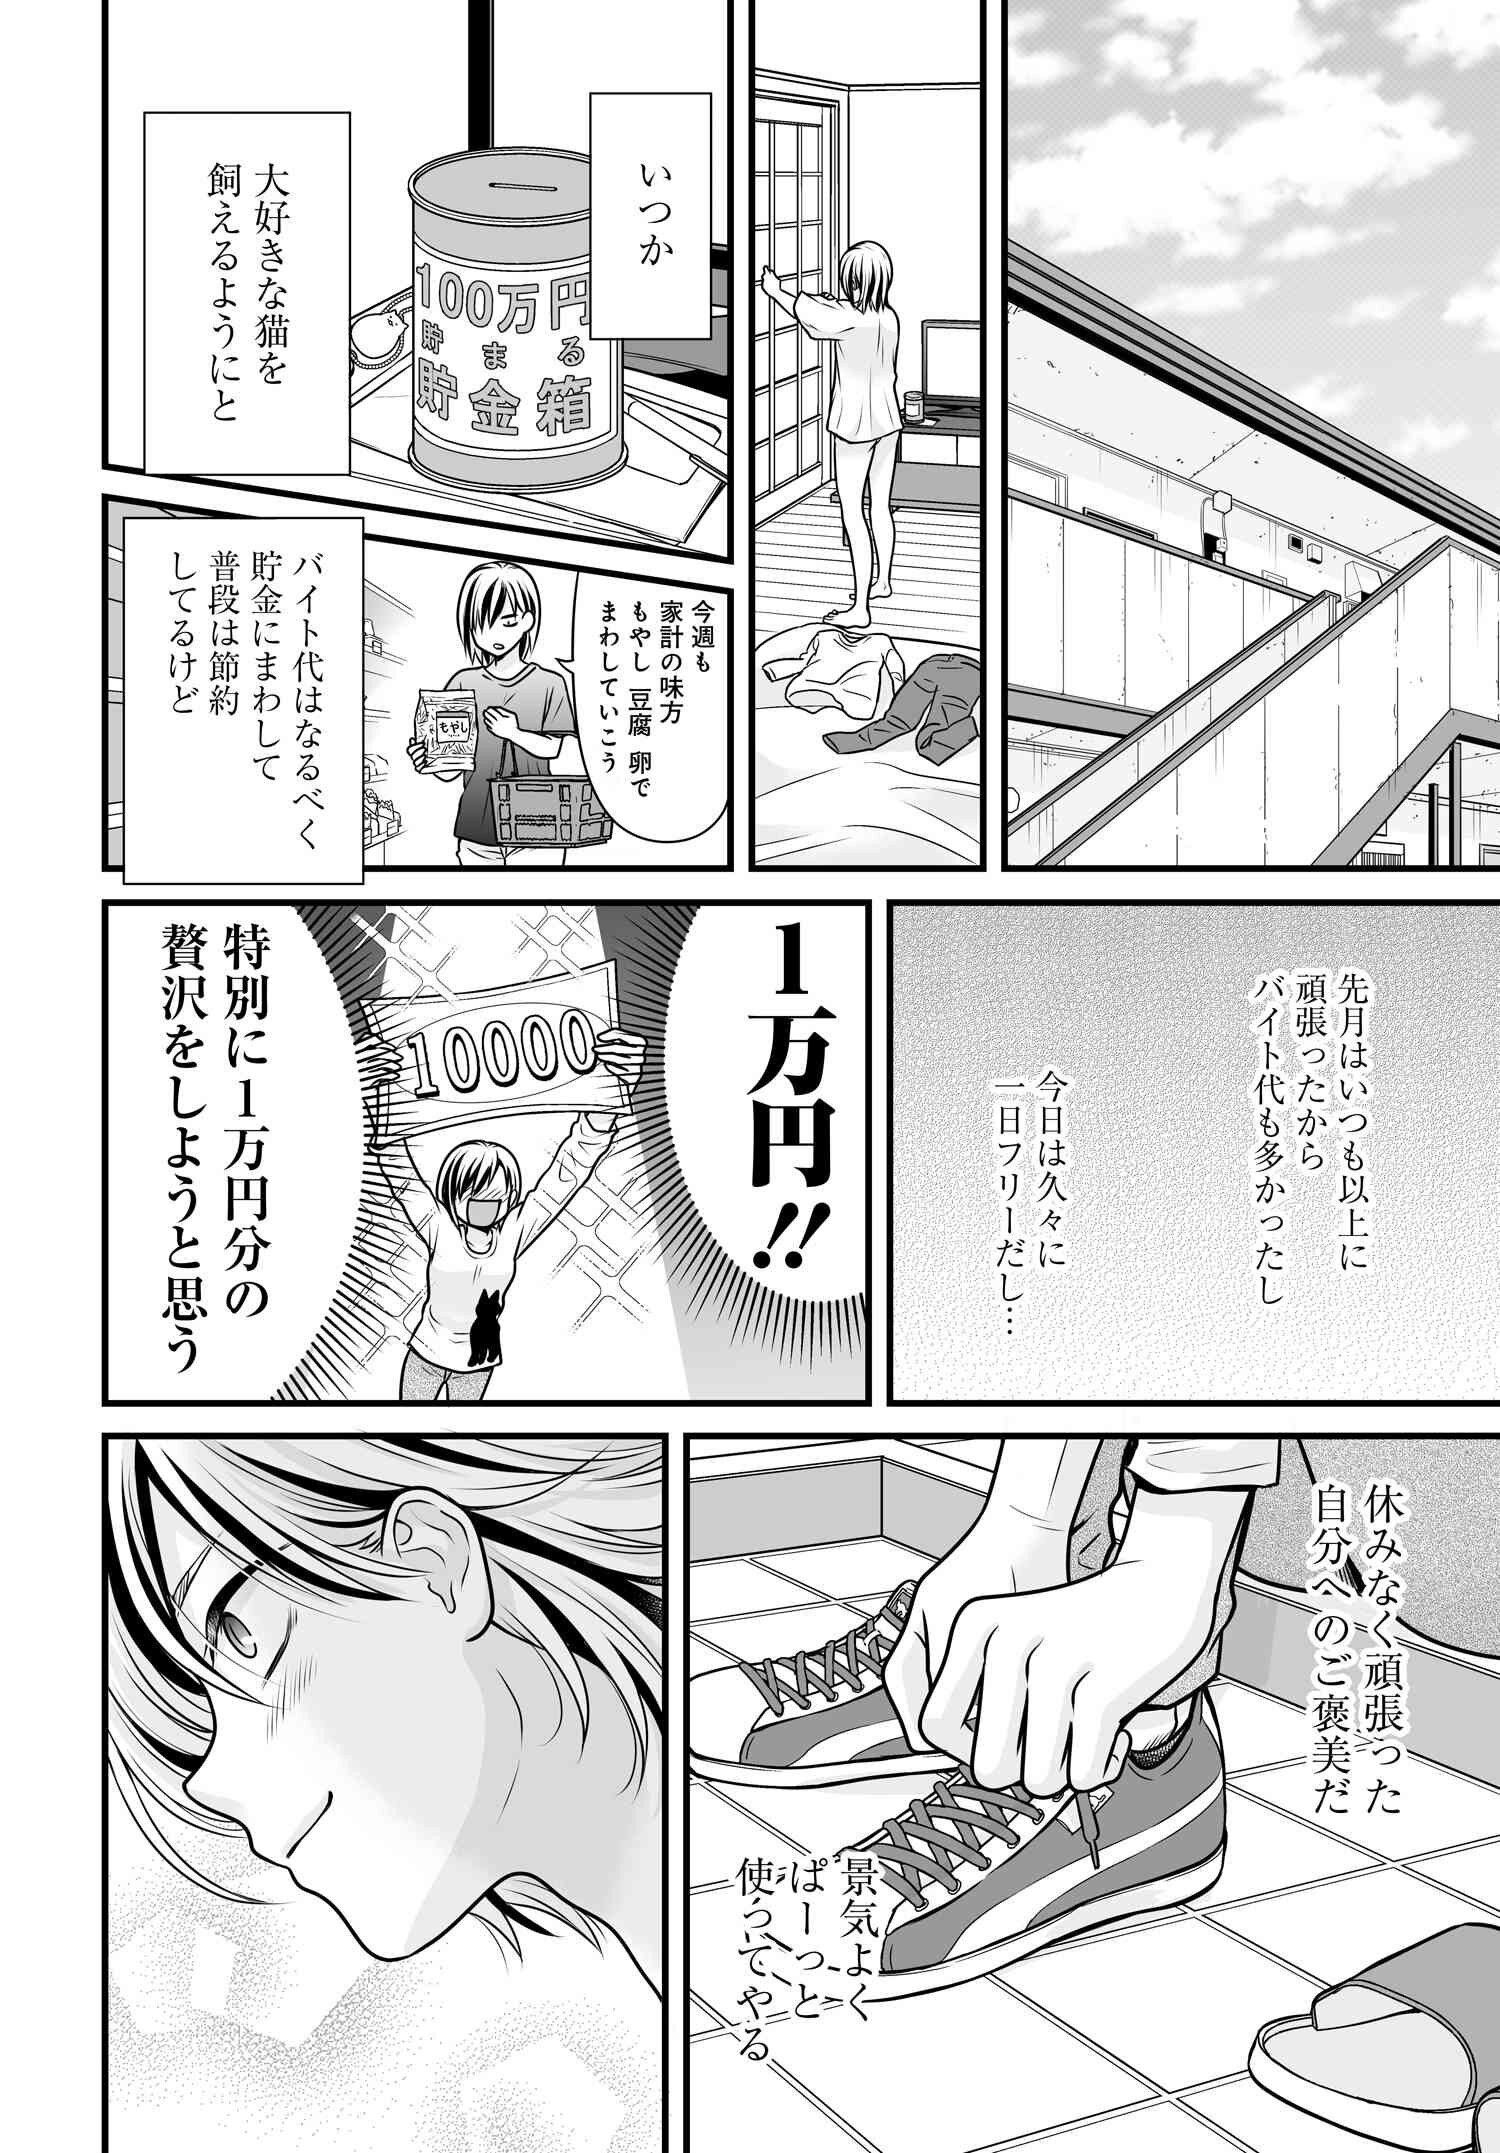 Joshikousei no Mudazukai - Chapter 105 - Page 3